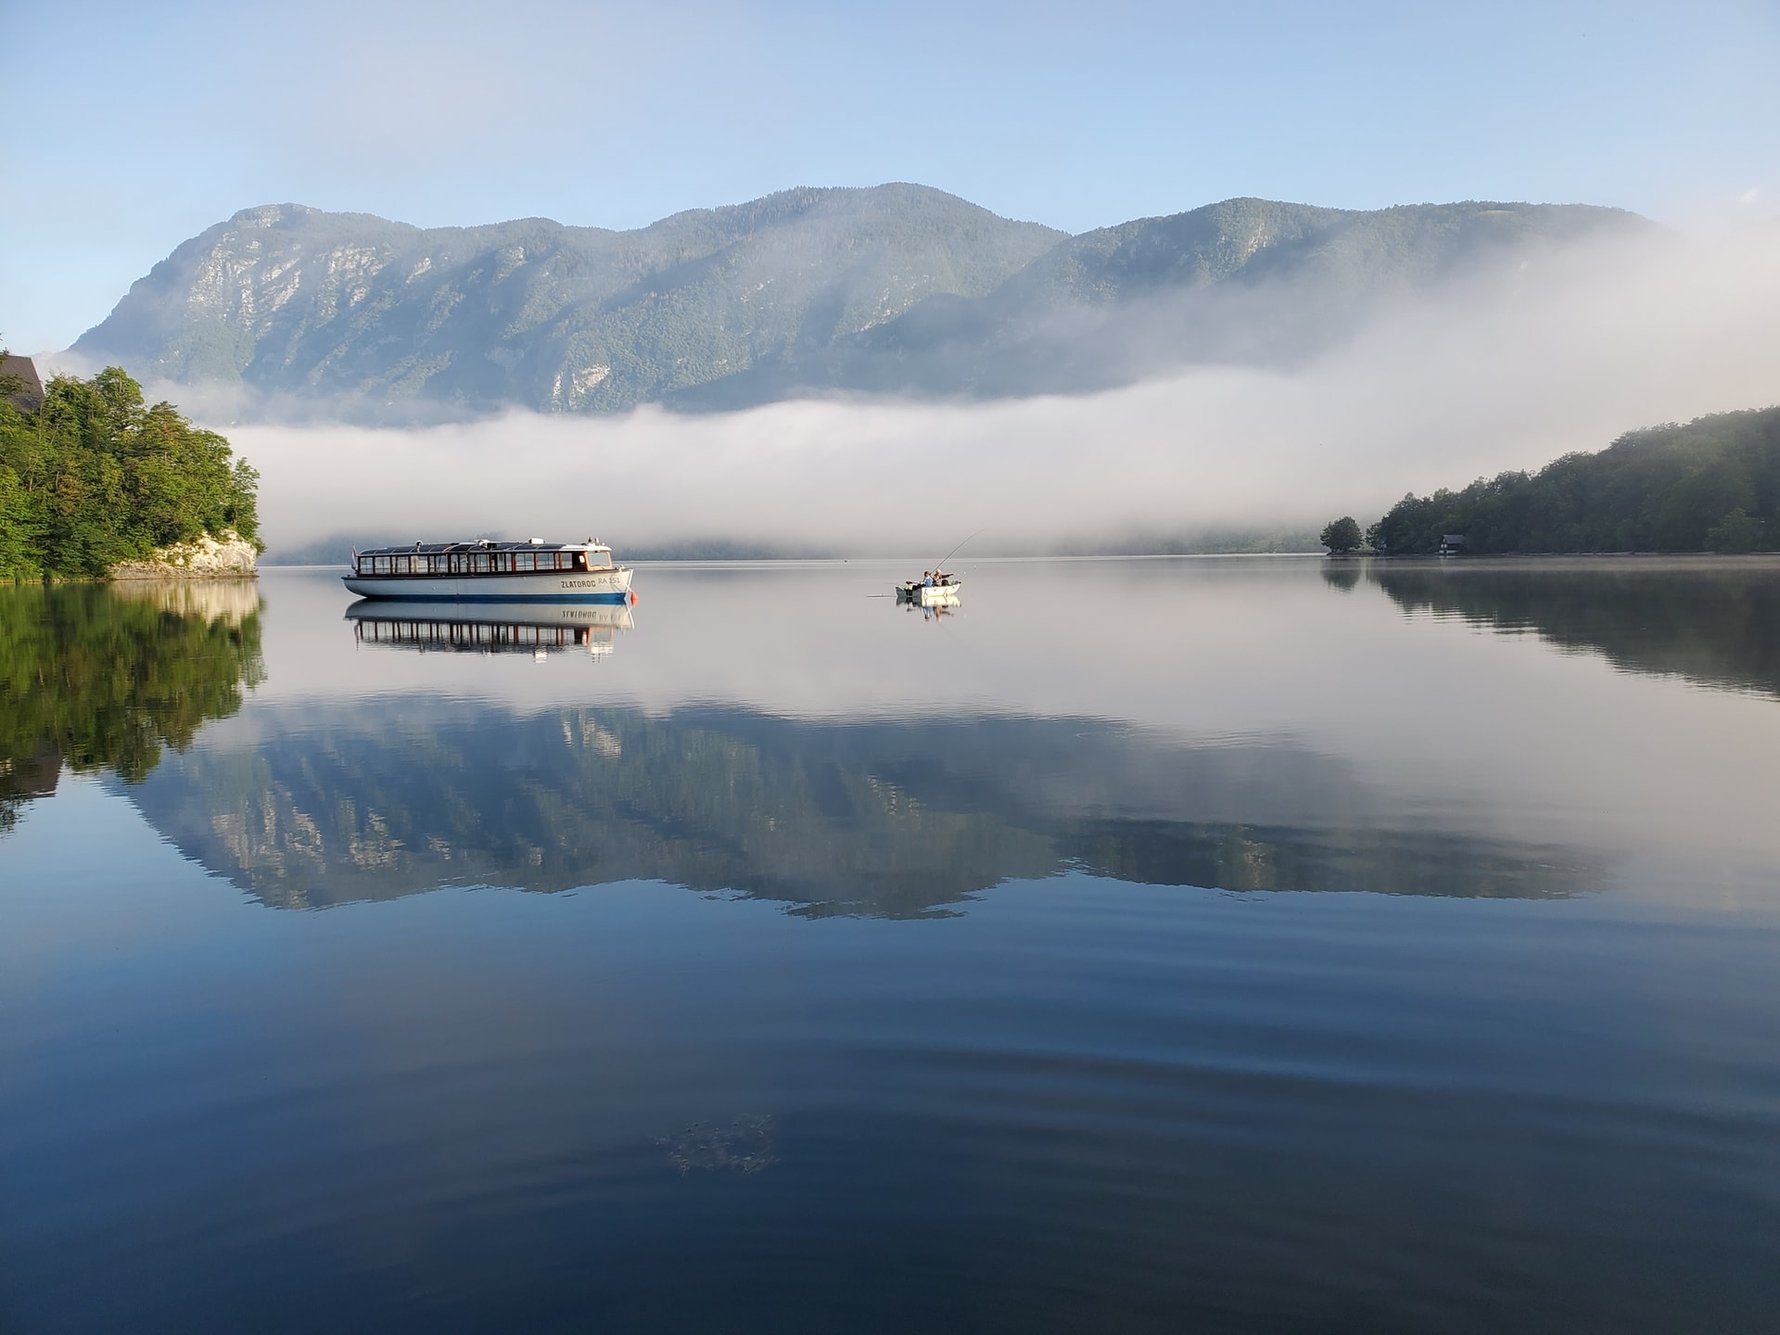 Top 12 Most Instagrammable Places in Slovenia - Bohinj © hasmik-ghazaryan-olson-unsplash